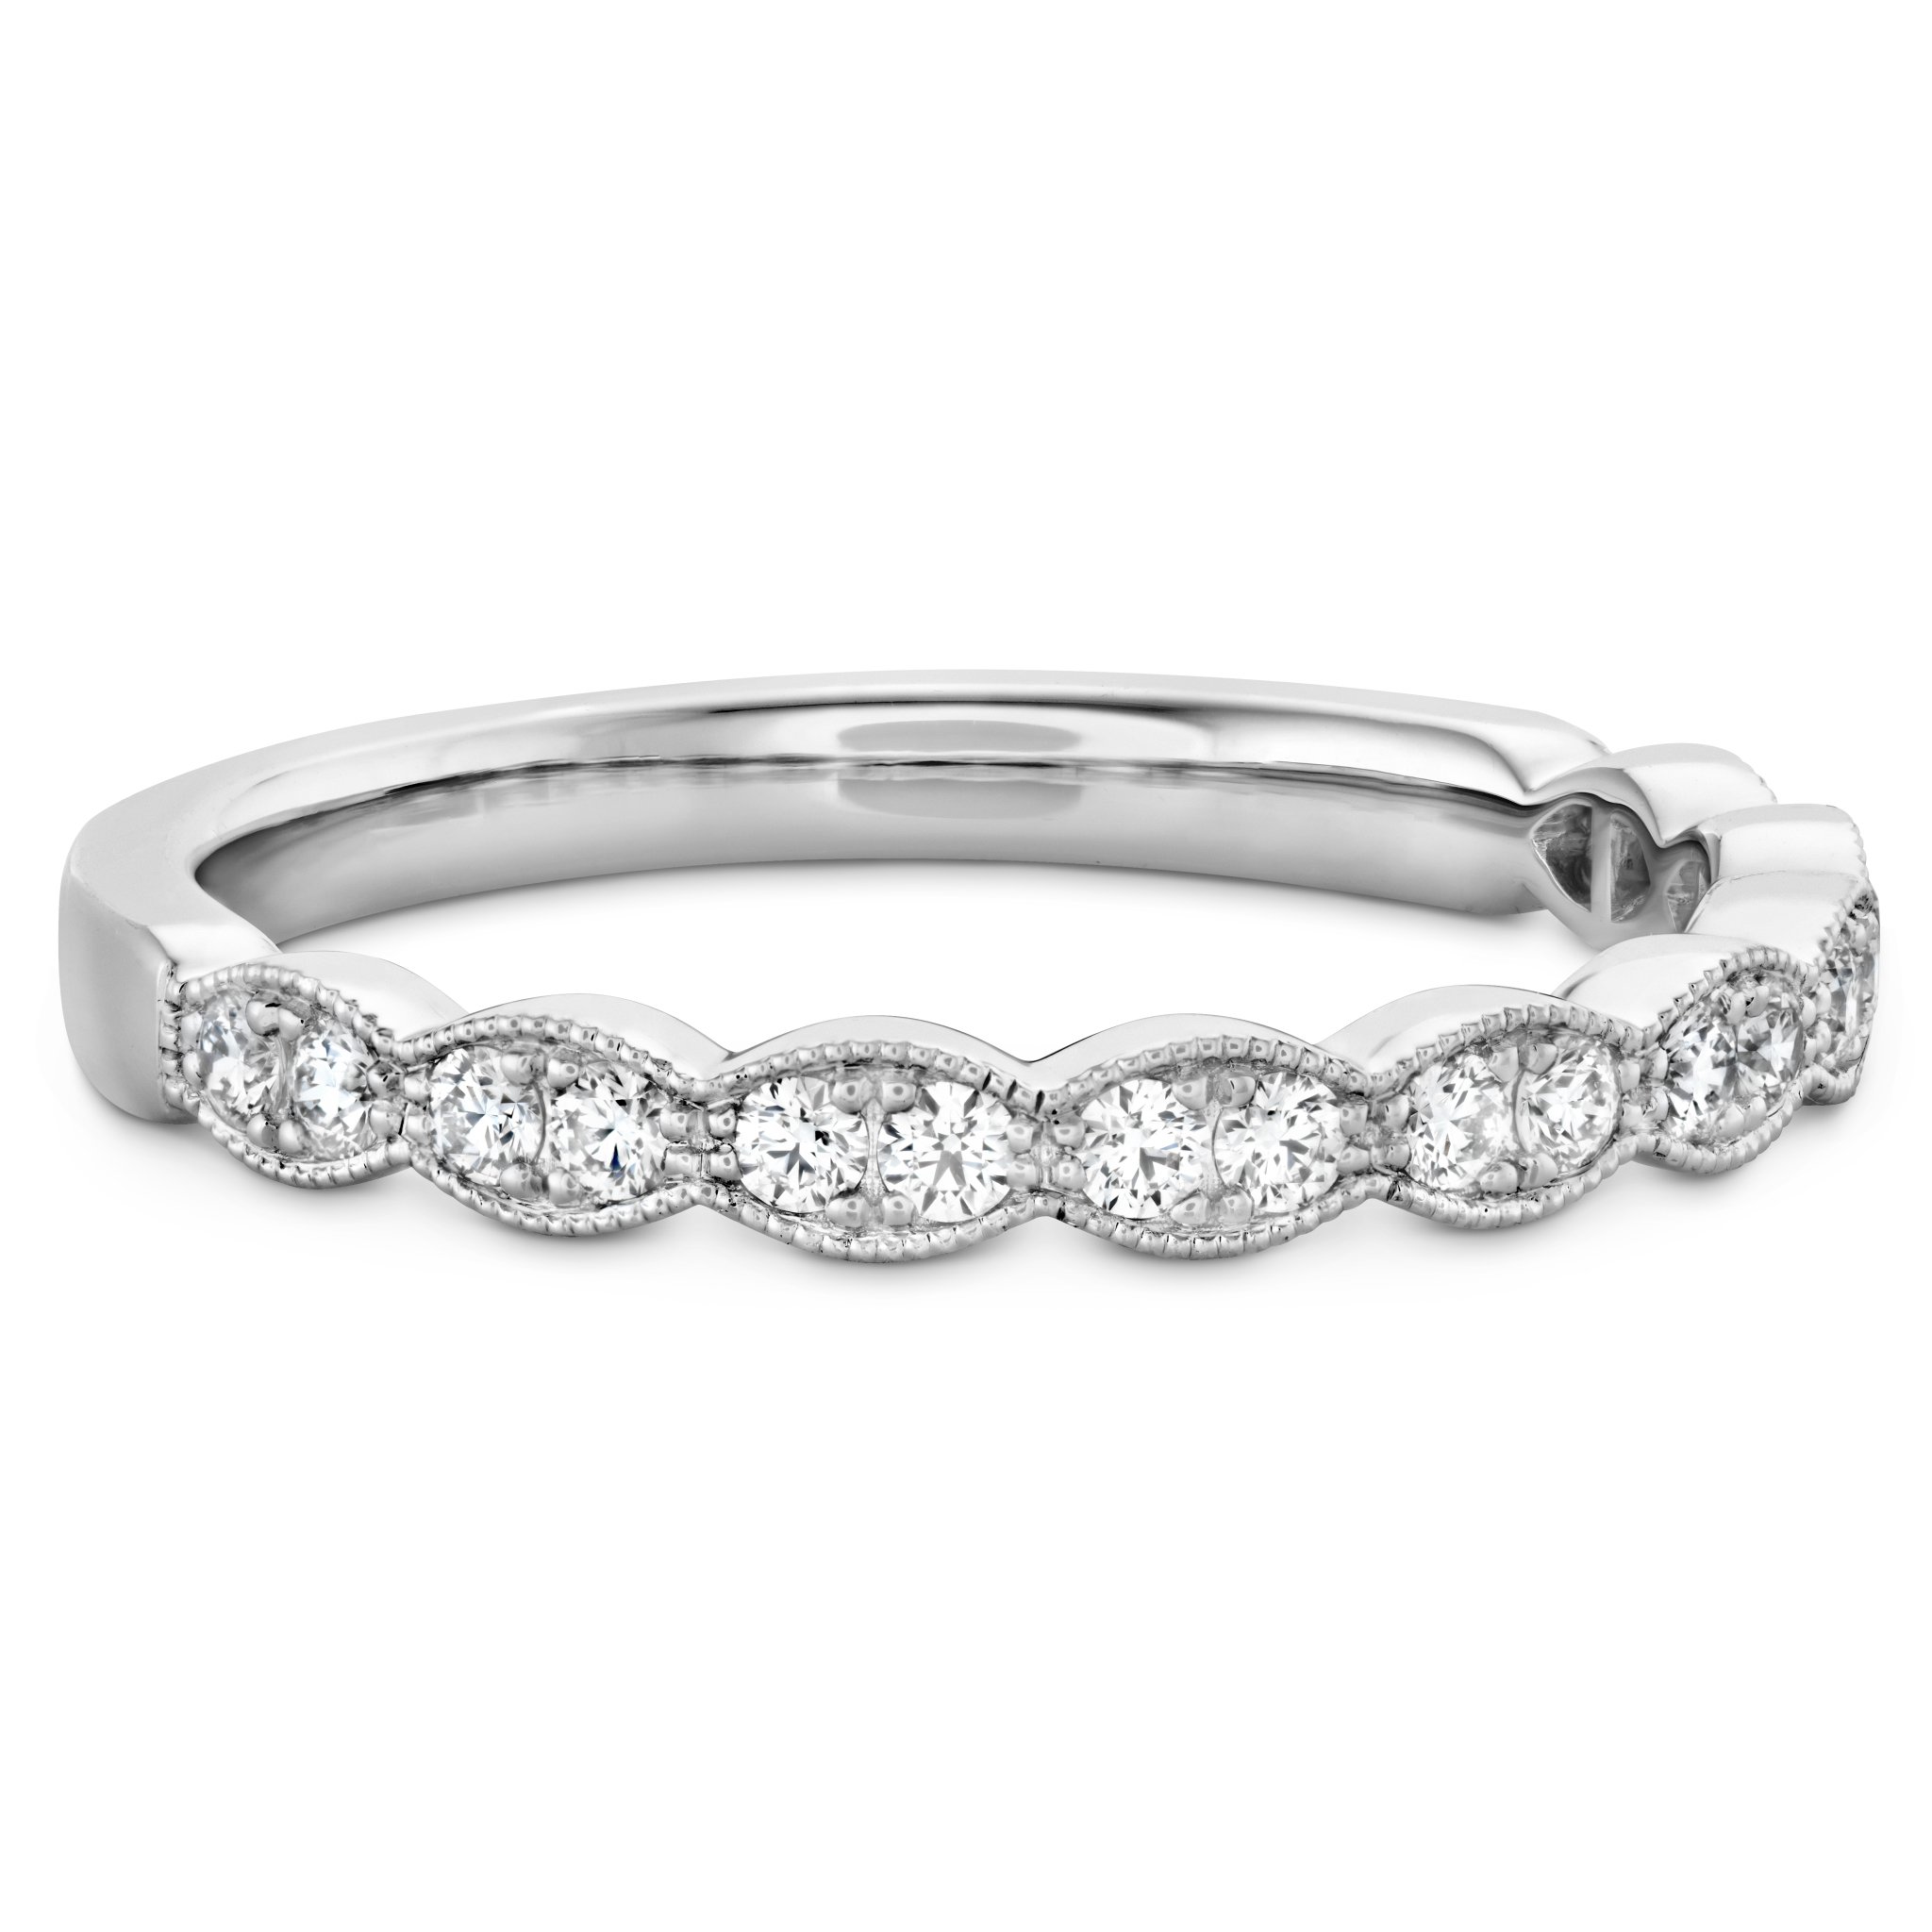 https://www.arthursjewelers.com/content/images/thumbs/Original/Lorelei Floral Milgrain Diamond Band_1-179452591.jpg